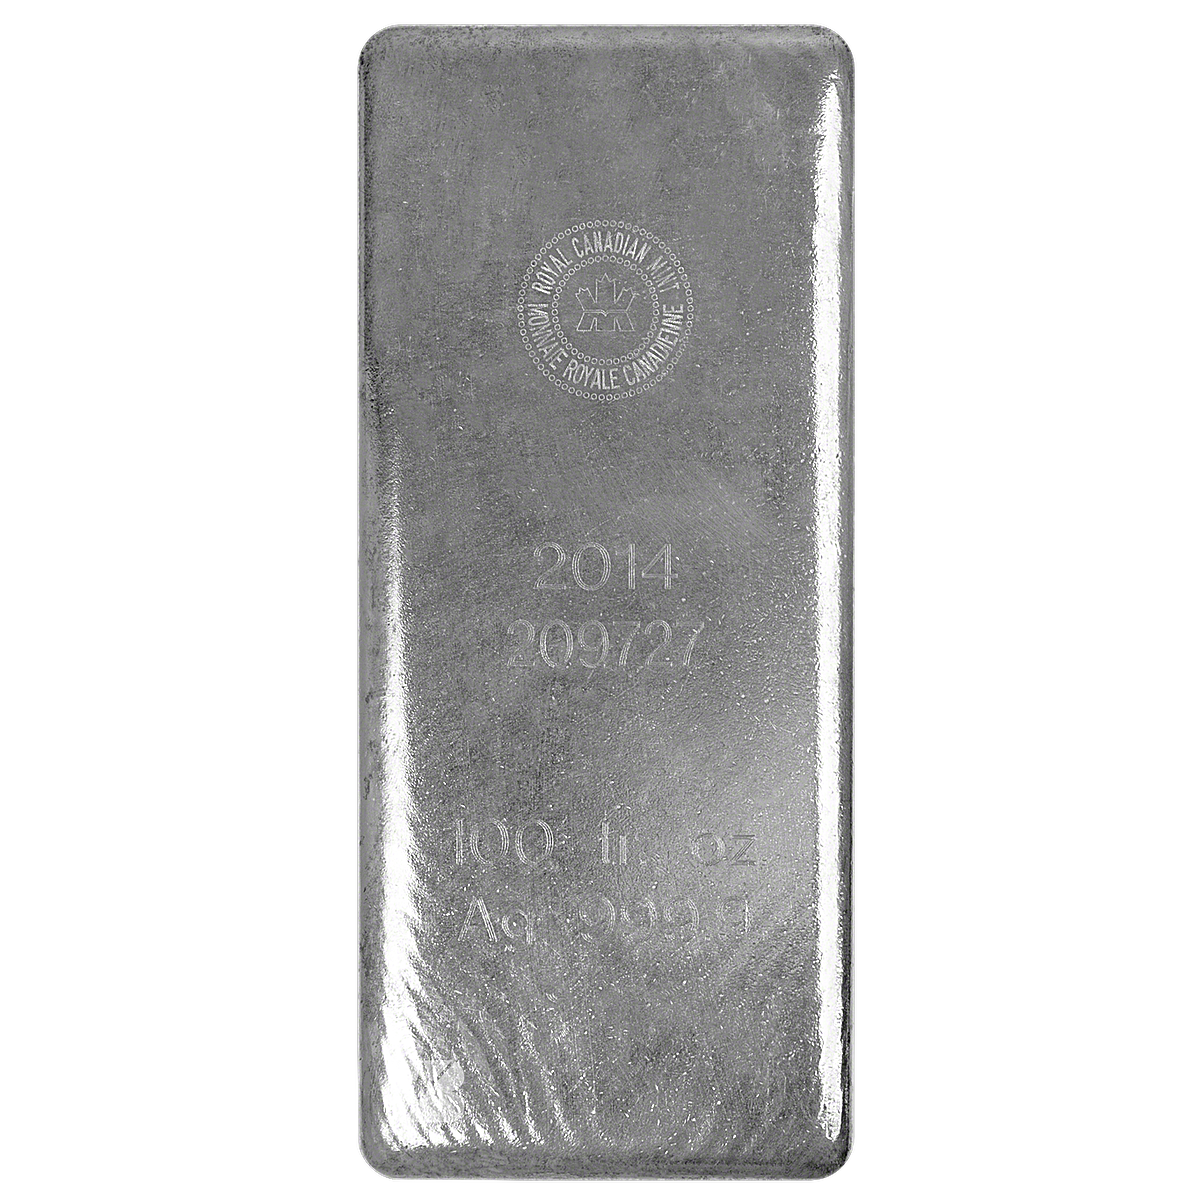 100 oz Royal Canadian Mint Silver Bar - MintedMarket